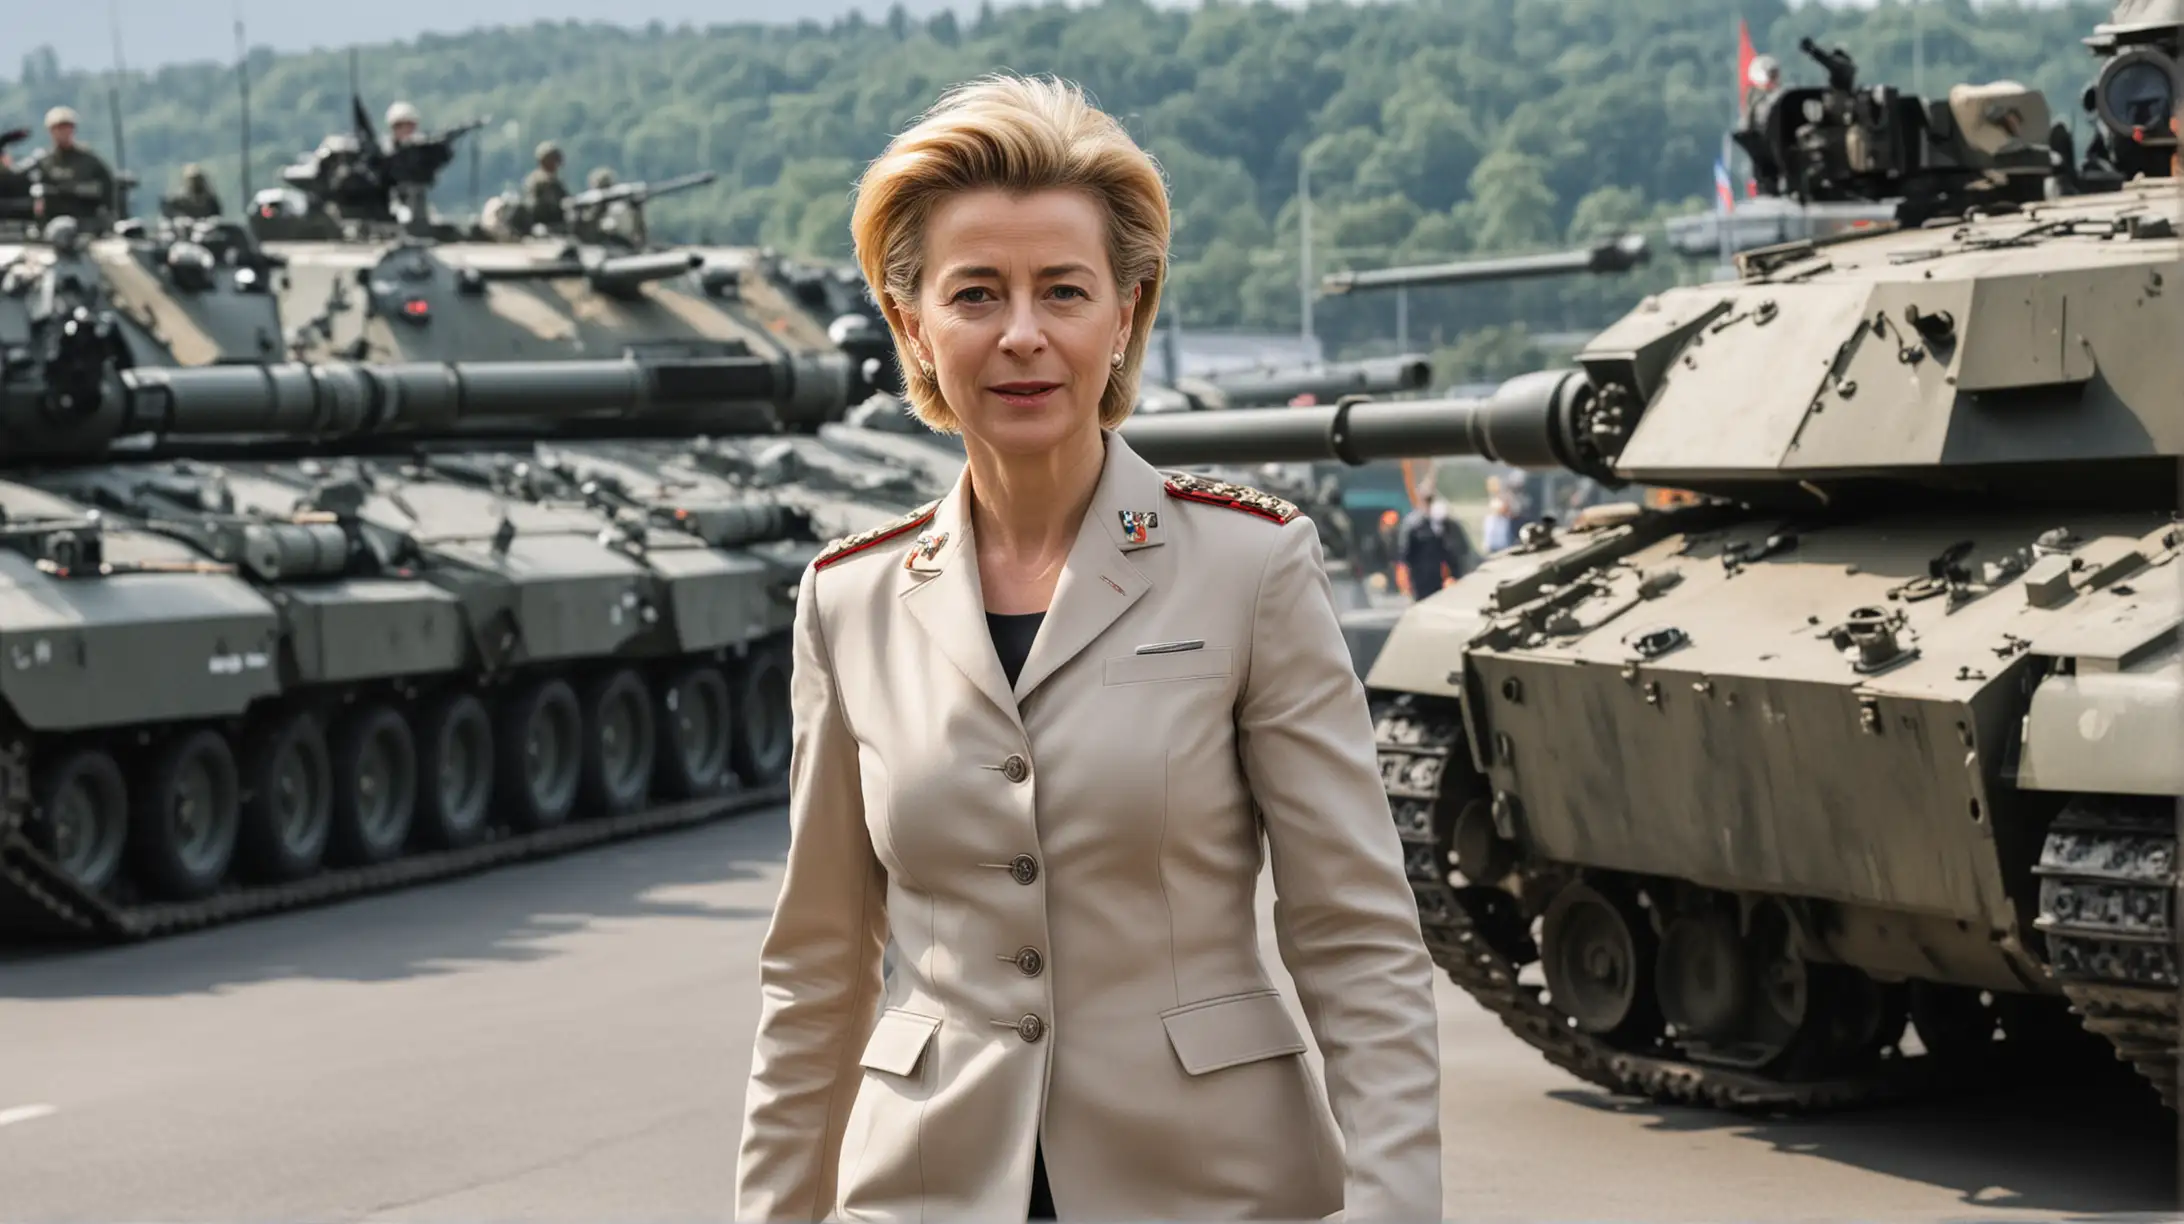 Ursula von der Leyen
dressed in a military uniform in front of tanks on the road